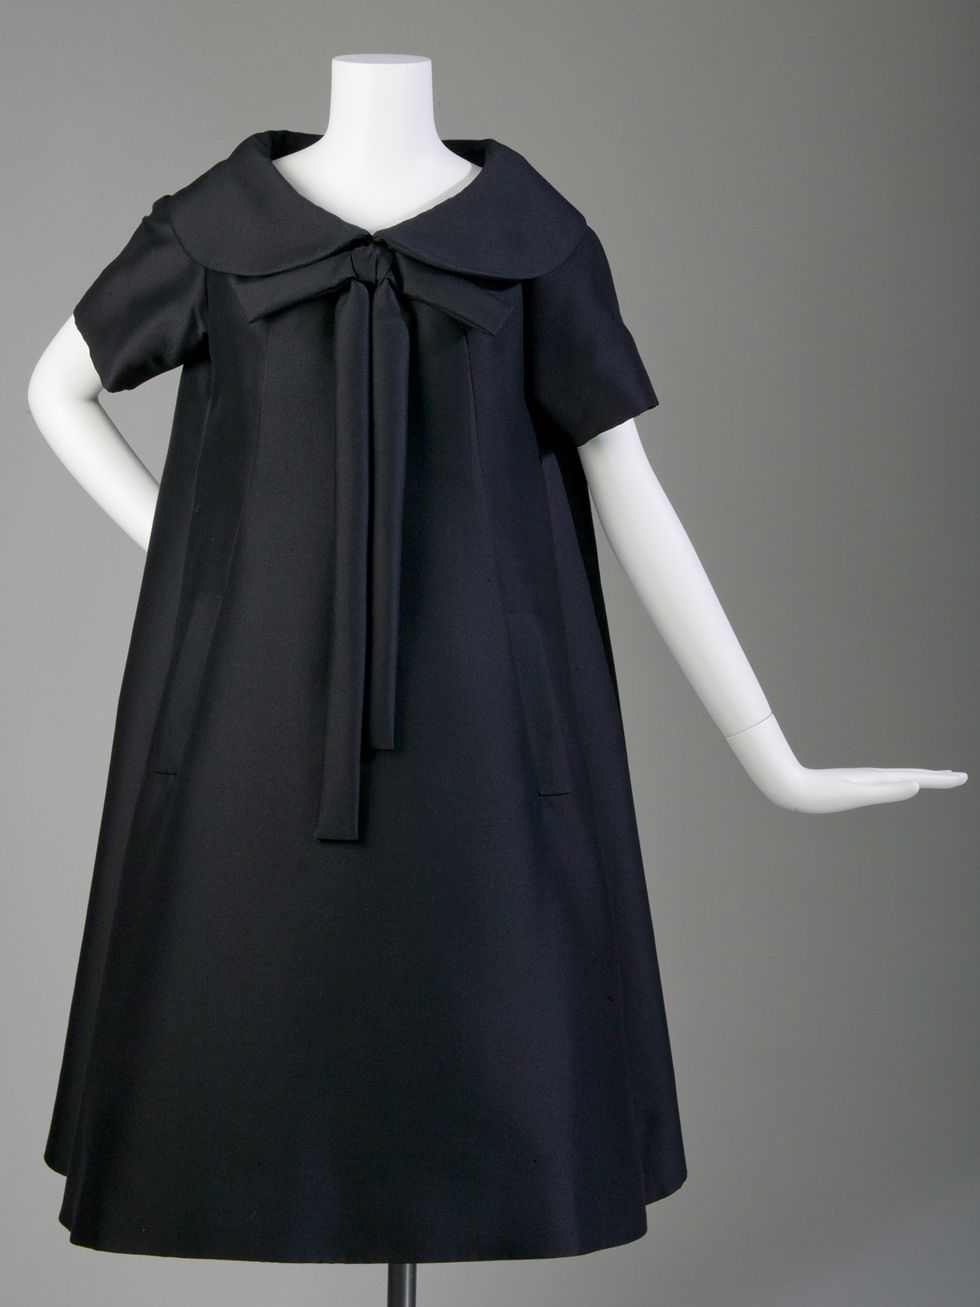 Sleeve, Dress, Style, Formal wear, One-piece garment, Fashion, Black, Grey, Day dress, Costume, 